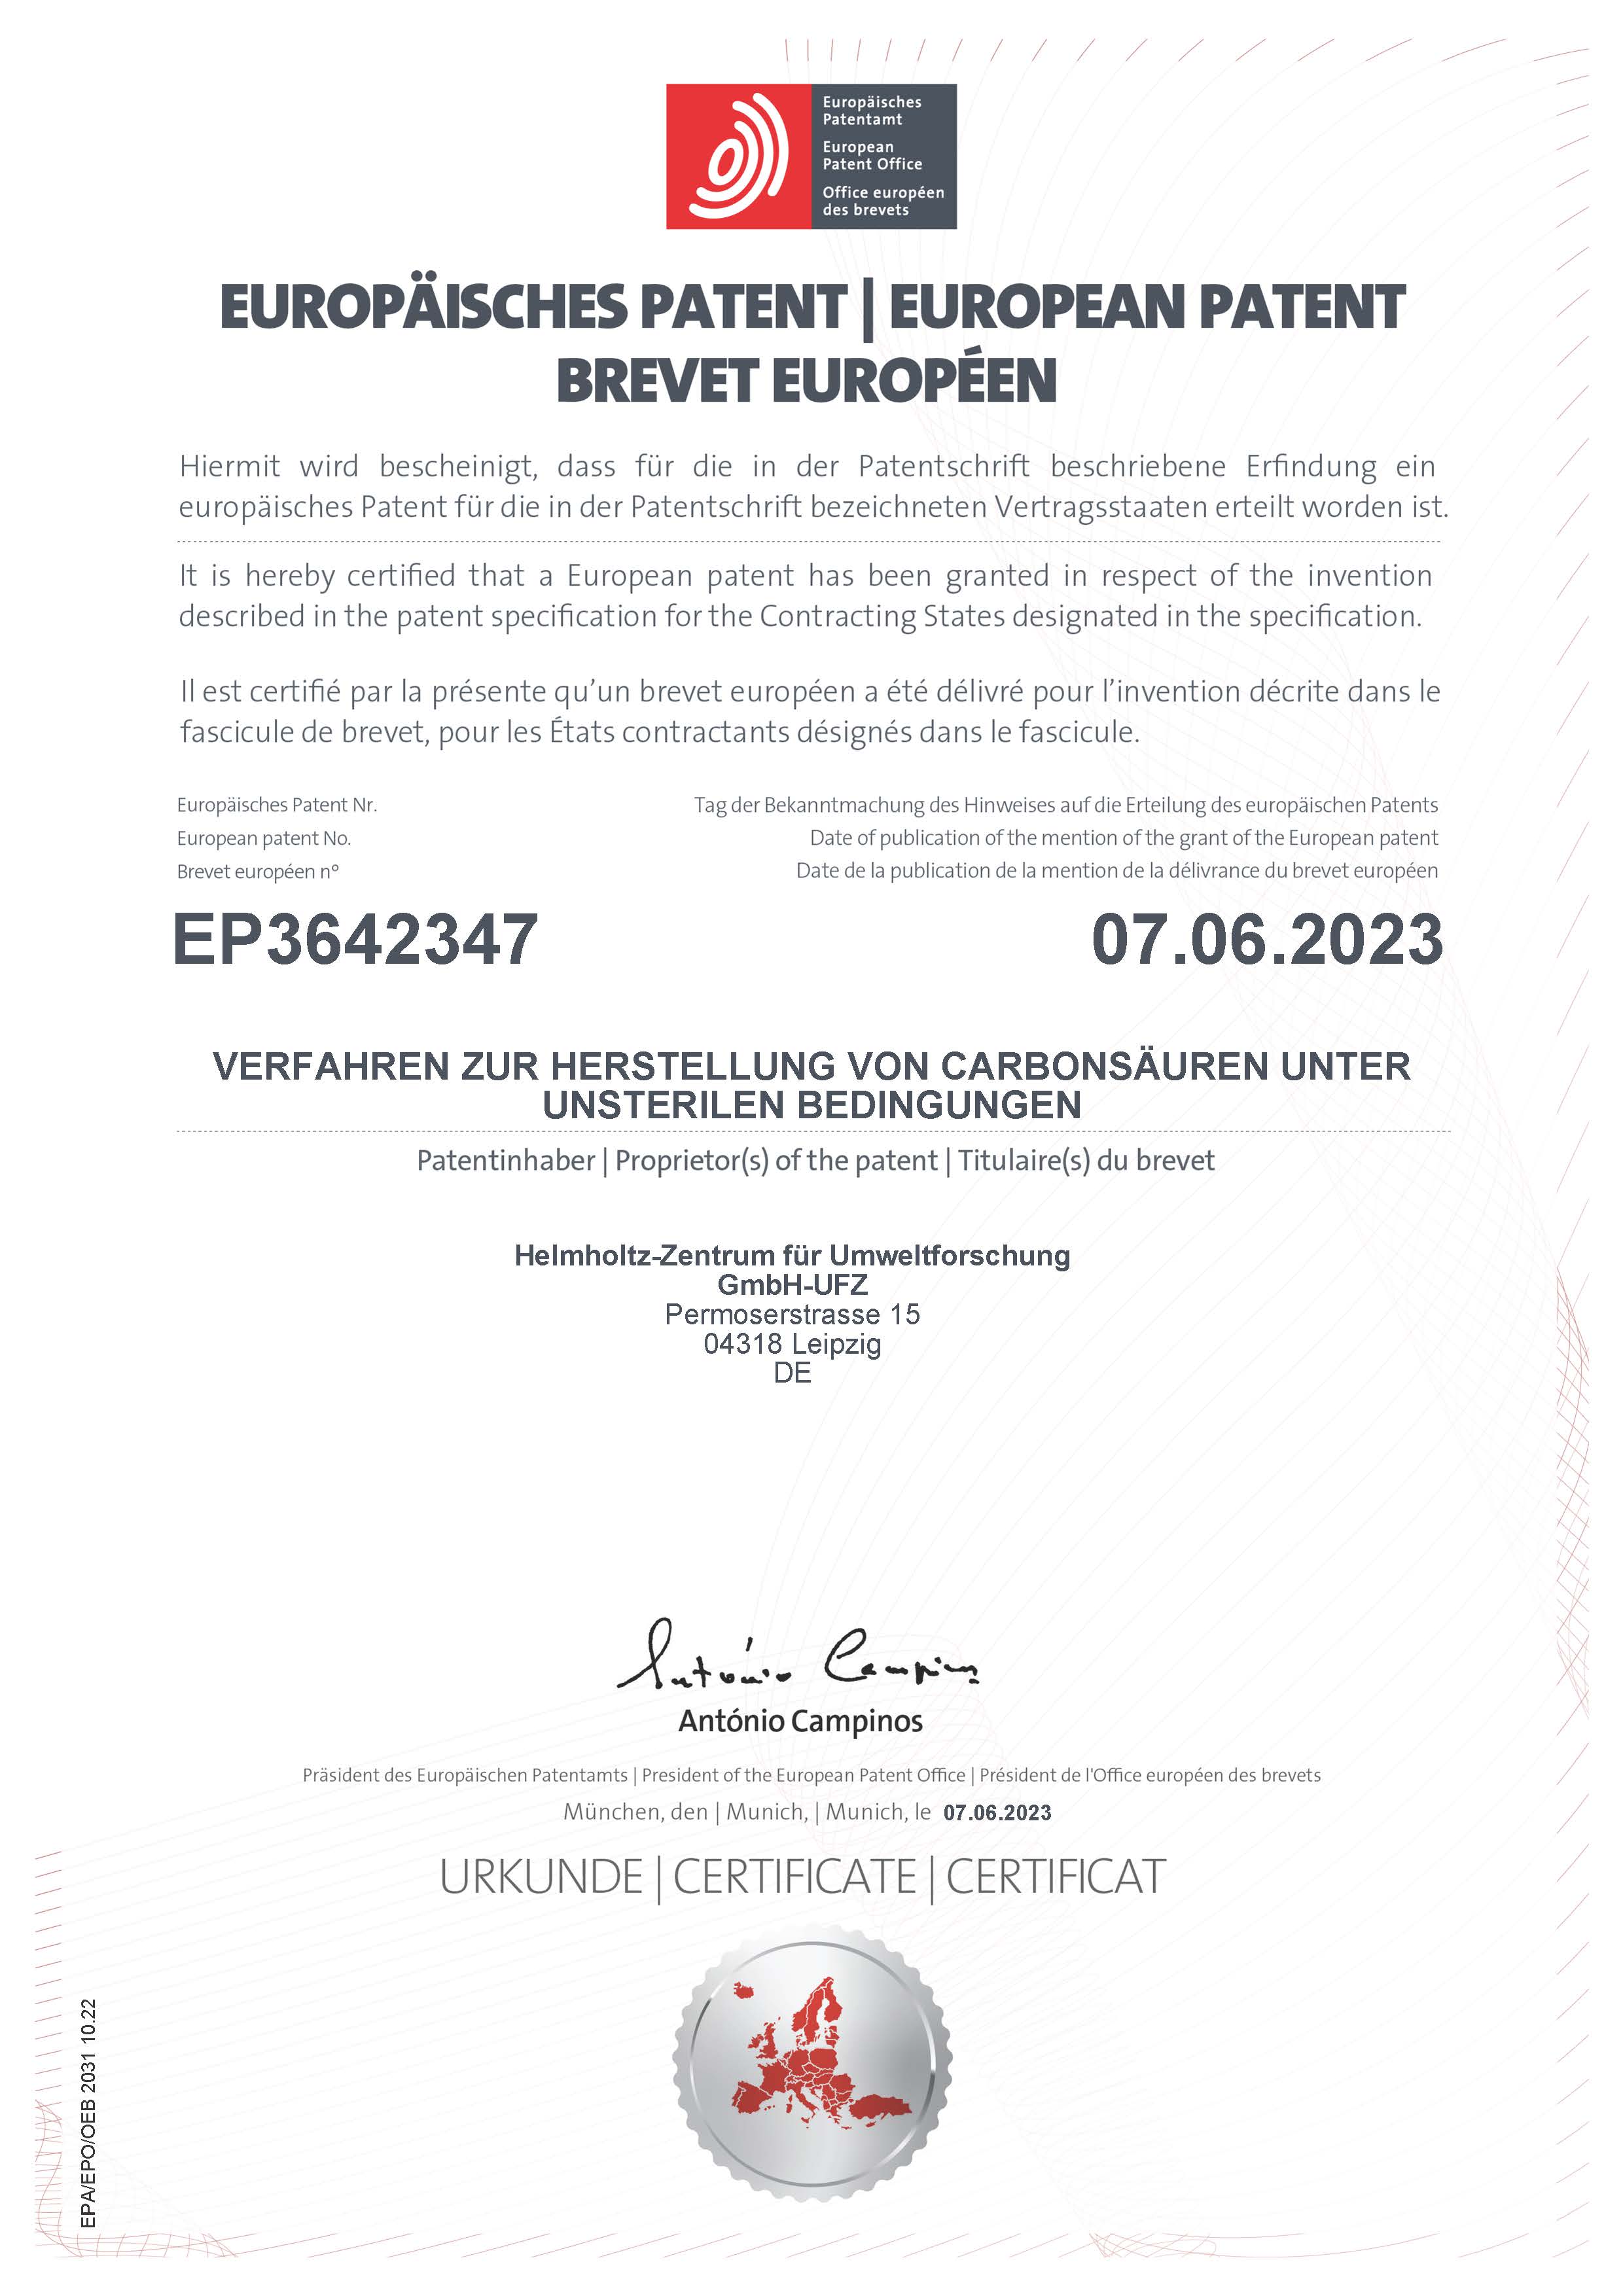 Unitary patent certificate